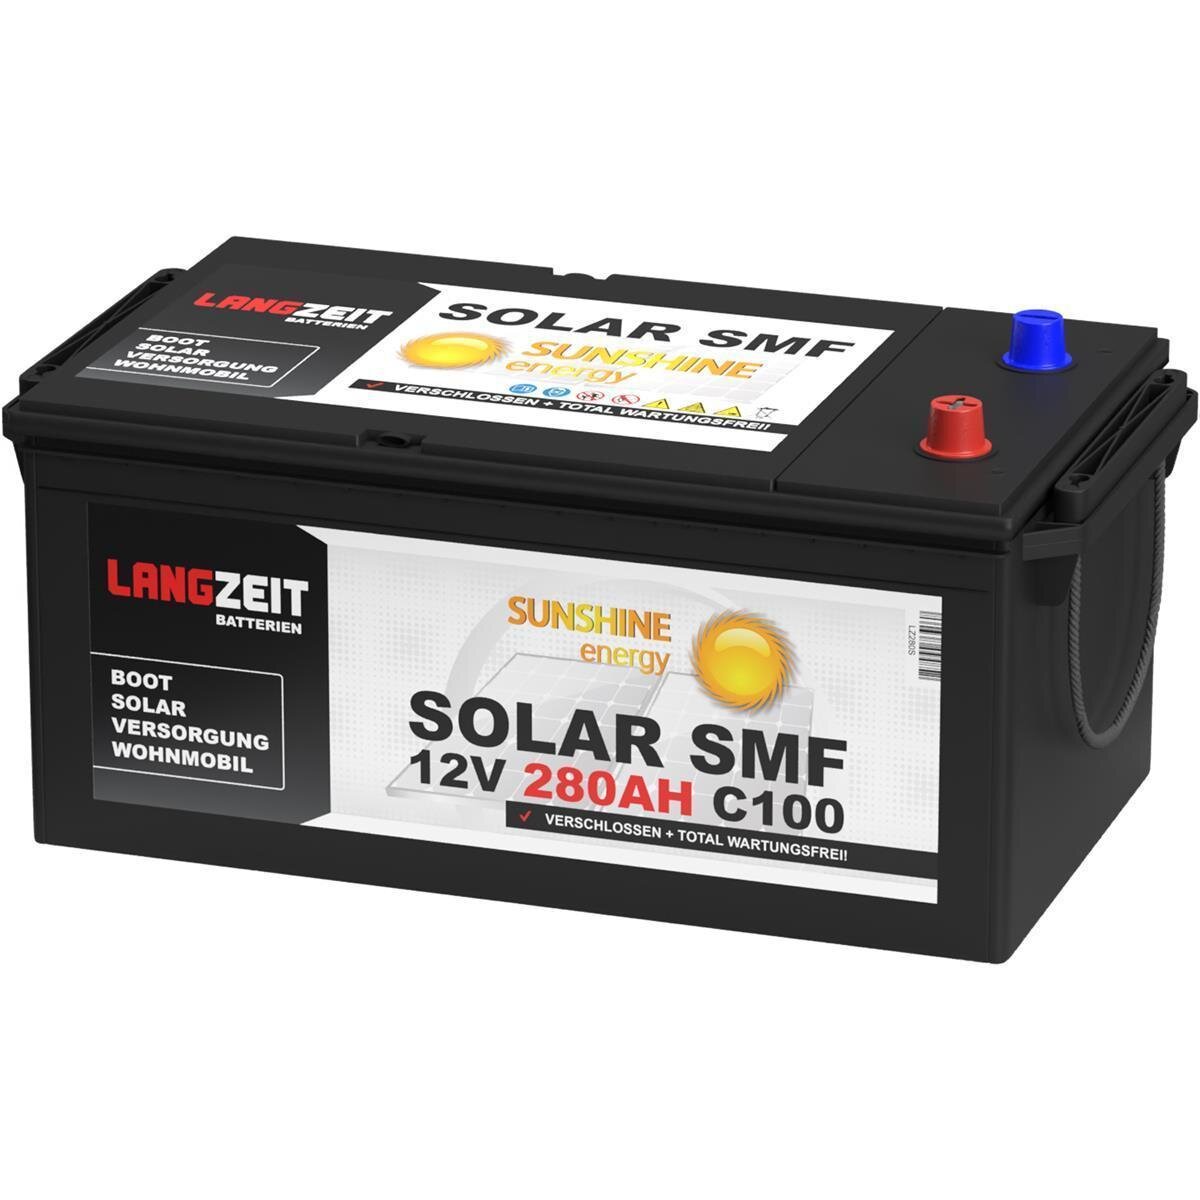 Langzeit Solarbatterie SMF 280Ah 12V, 249,50 €